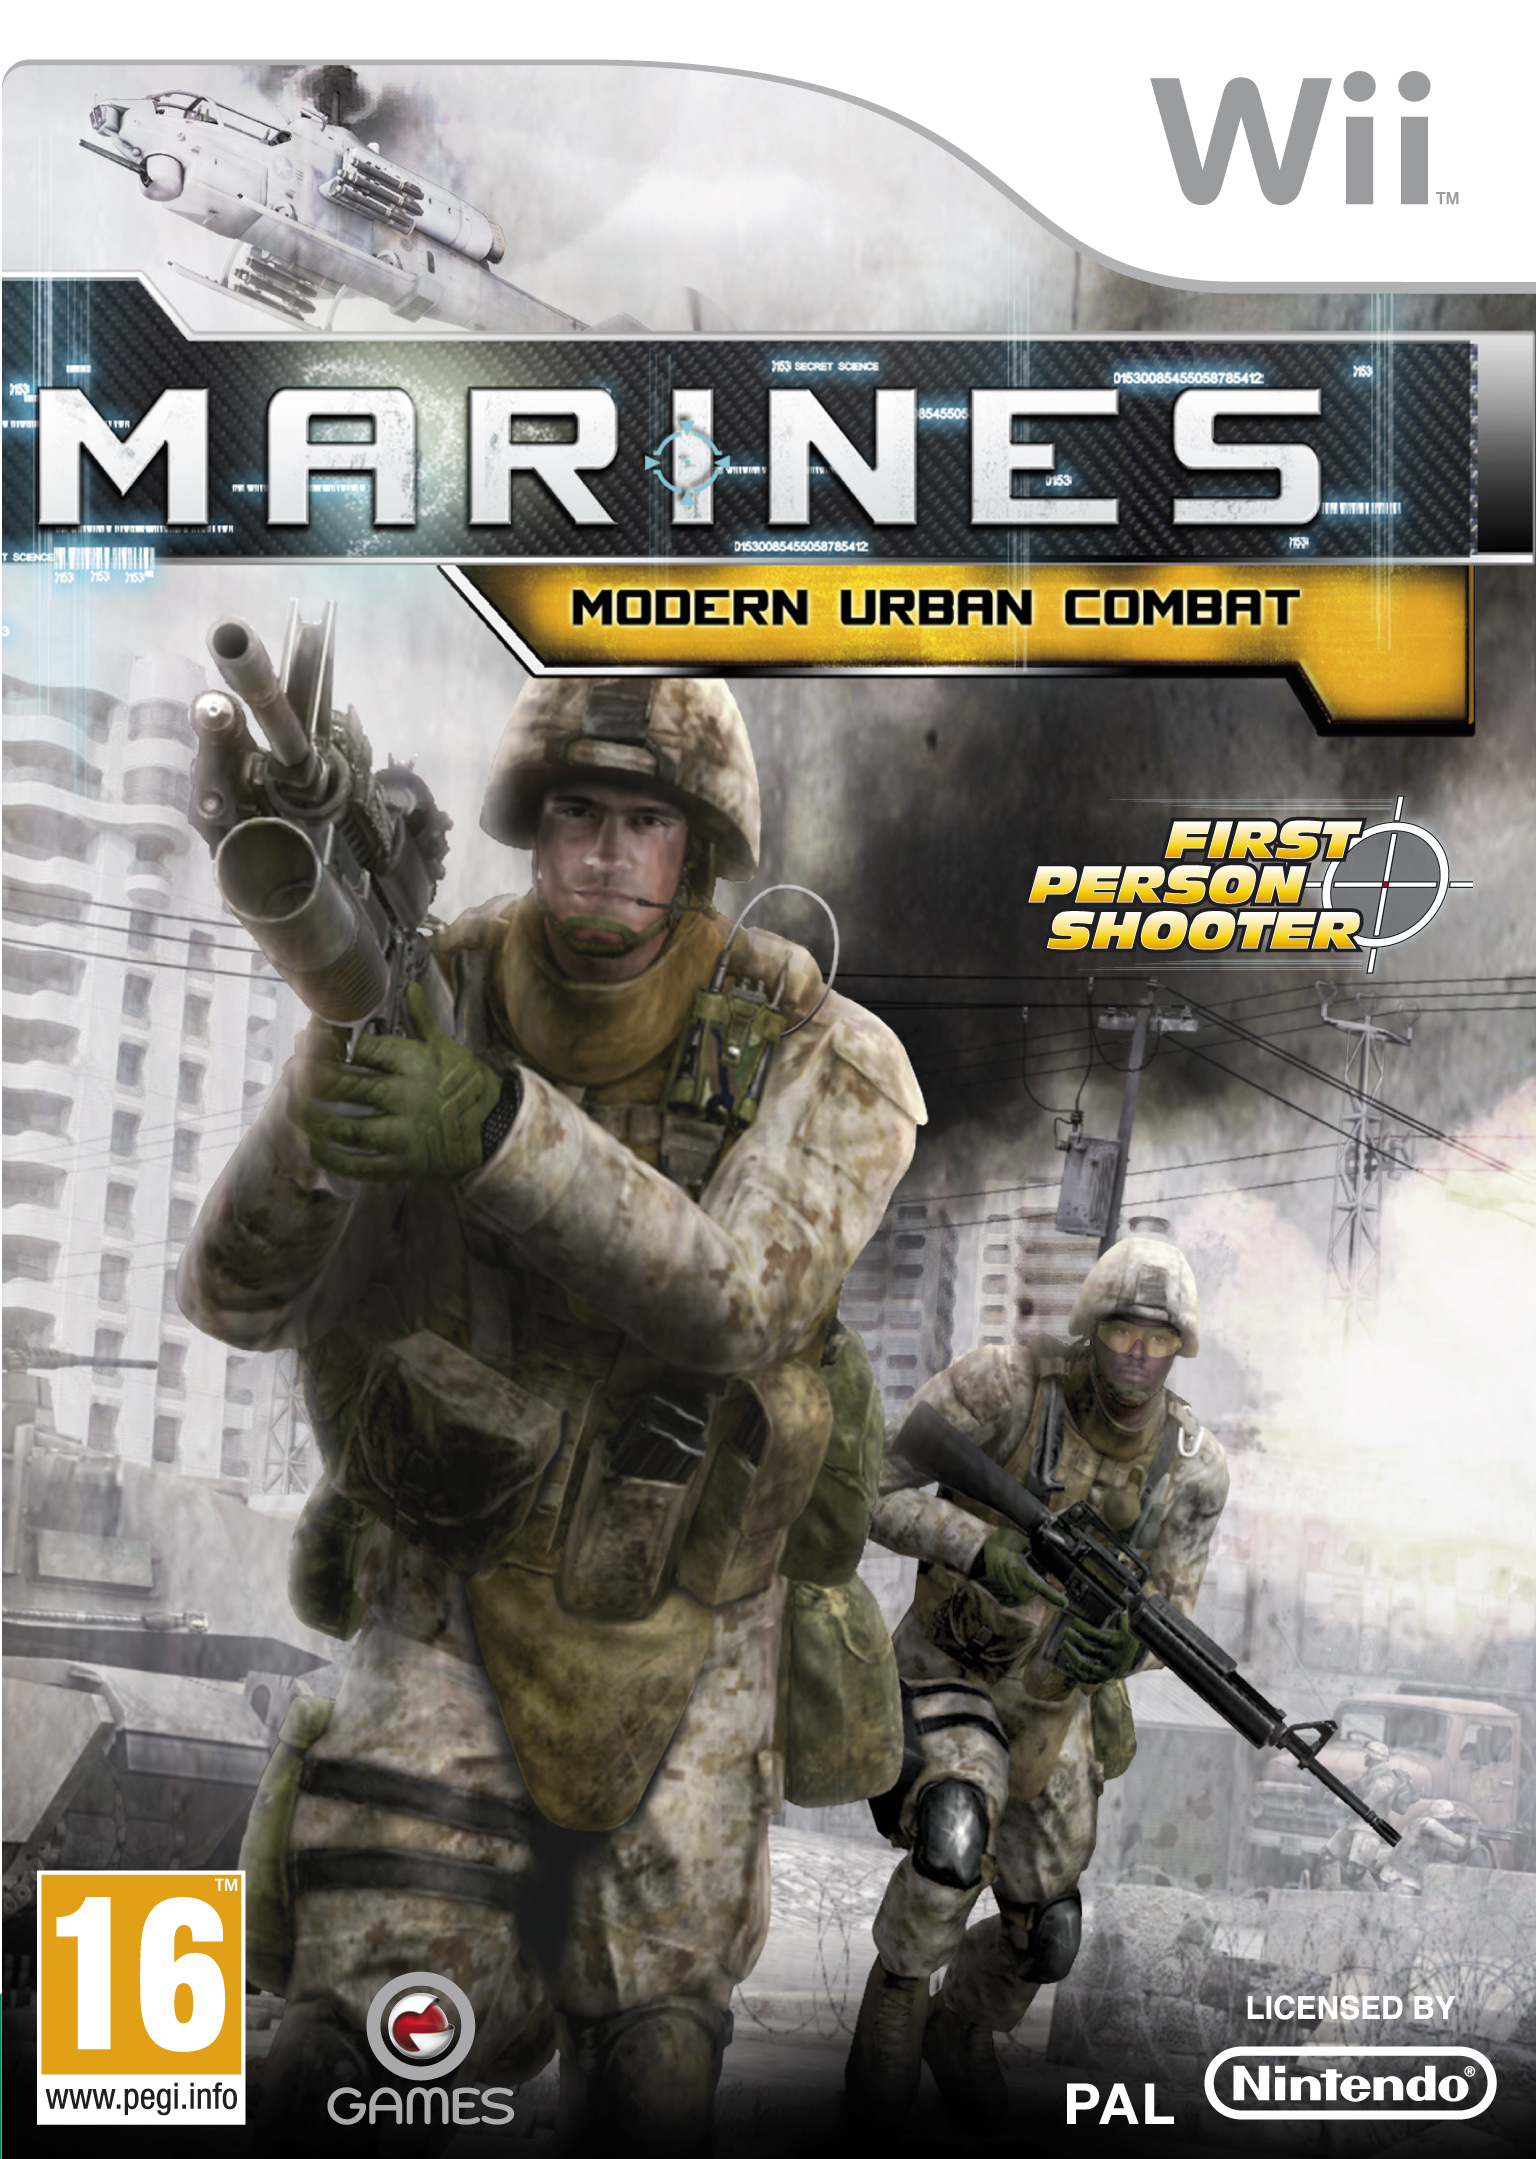 Bote de Marines : Modern Urban Combat